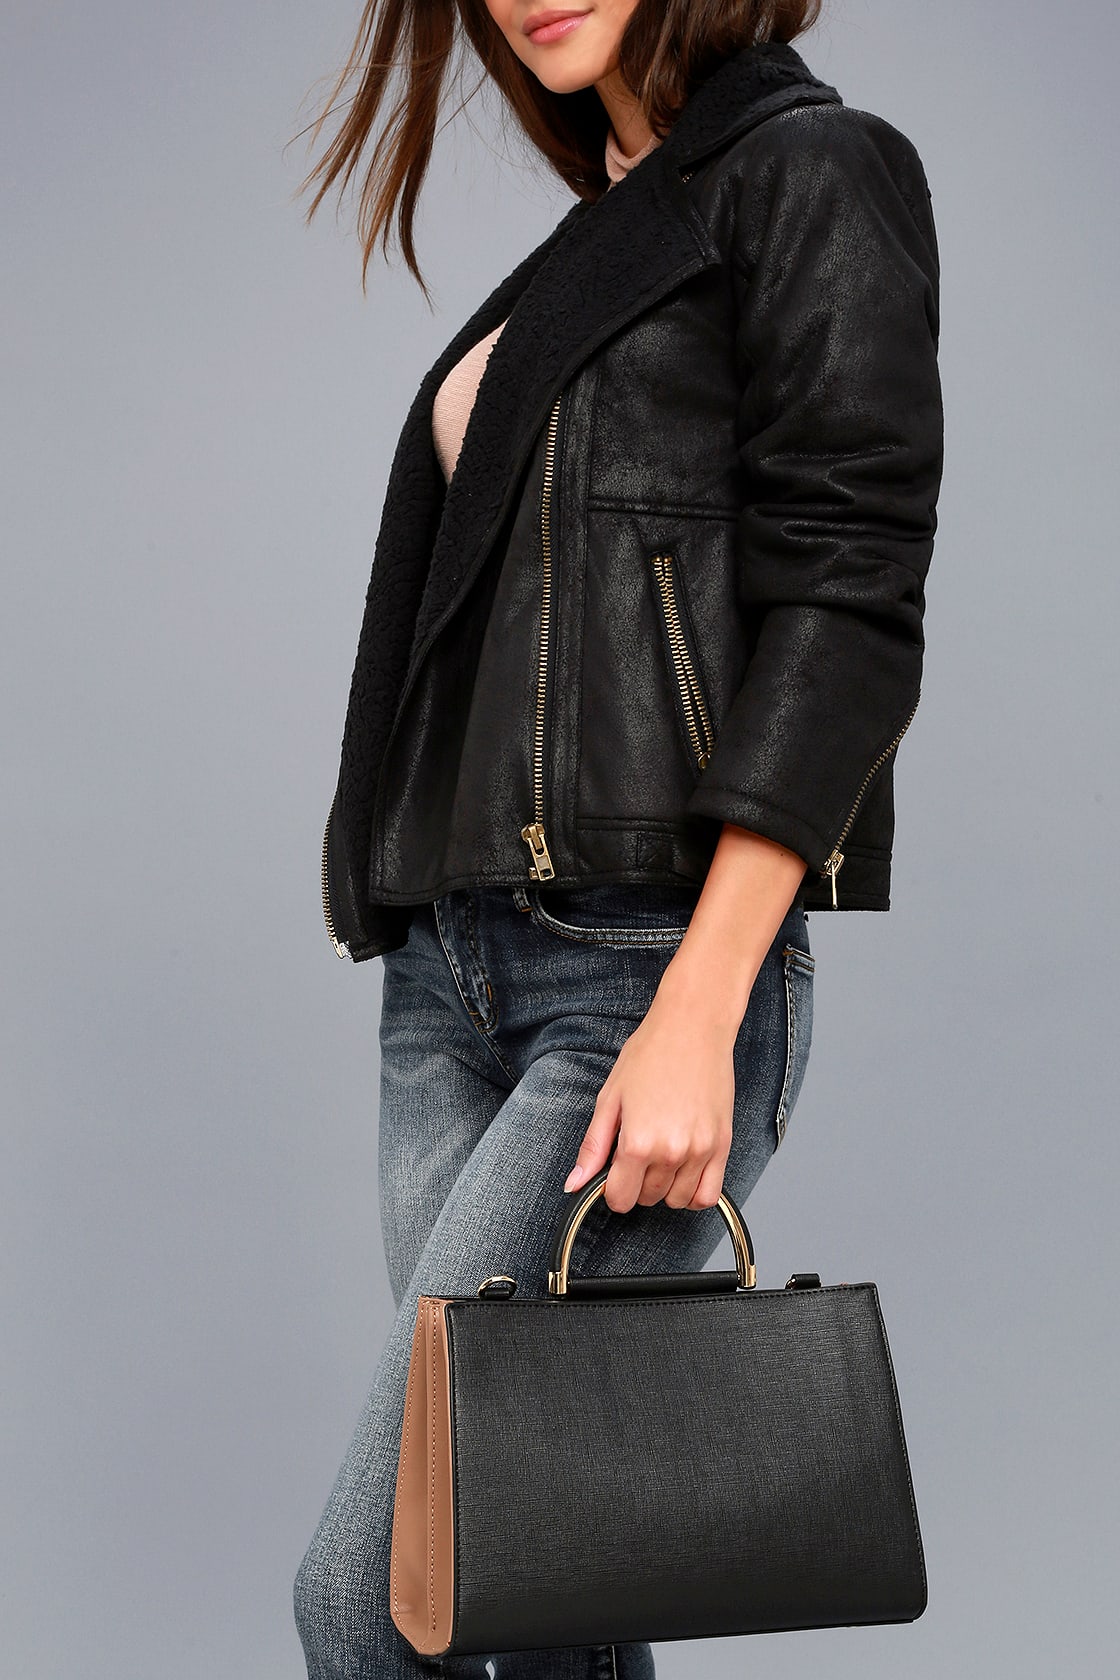 Chic Light Brown and Black Handbag - Vegan Leather Handbag - Lulus